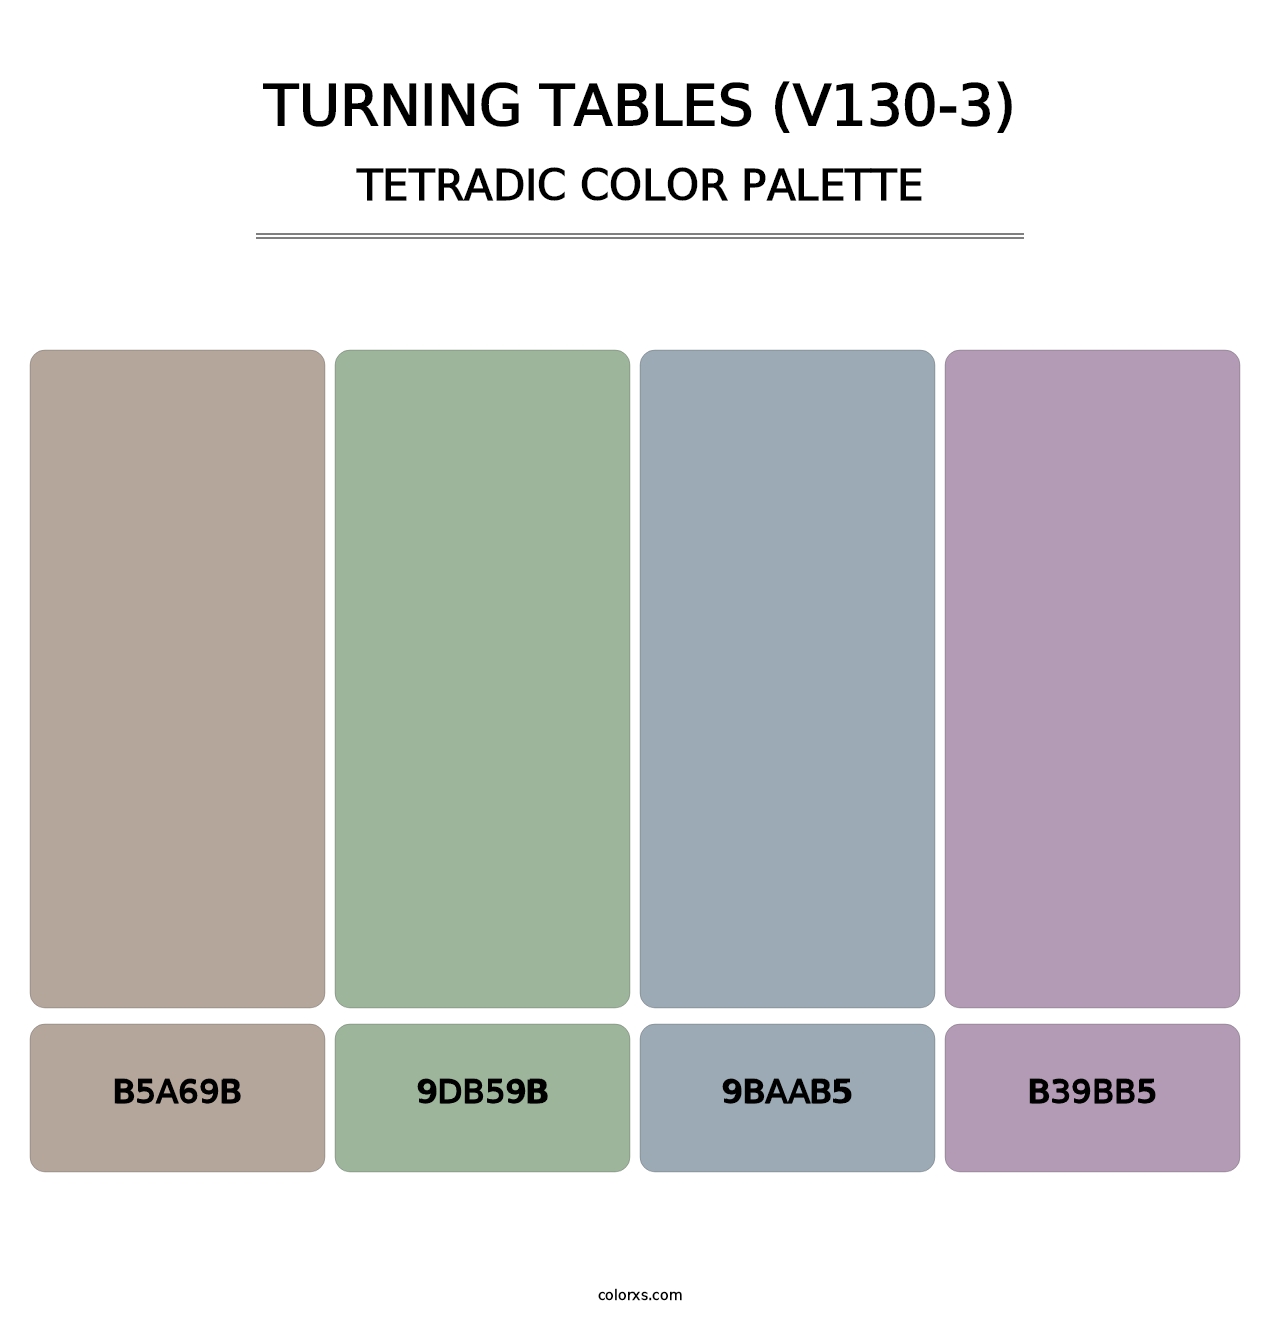 Turning Tables (V130-3) - Tetradic Color Palette